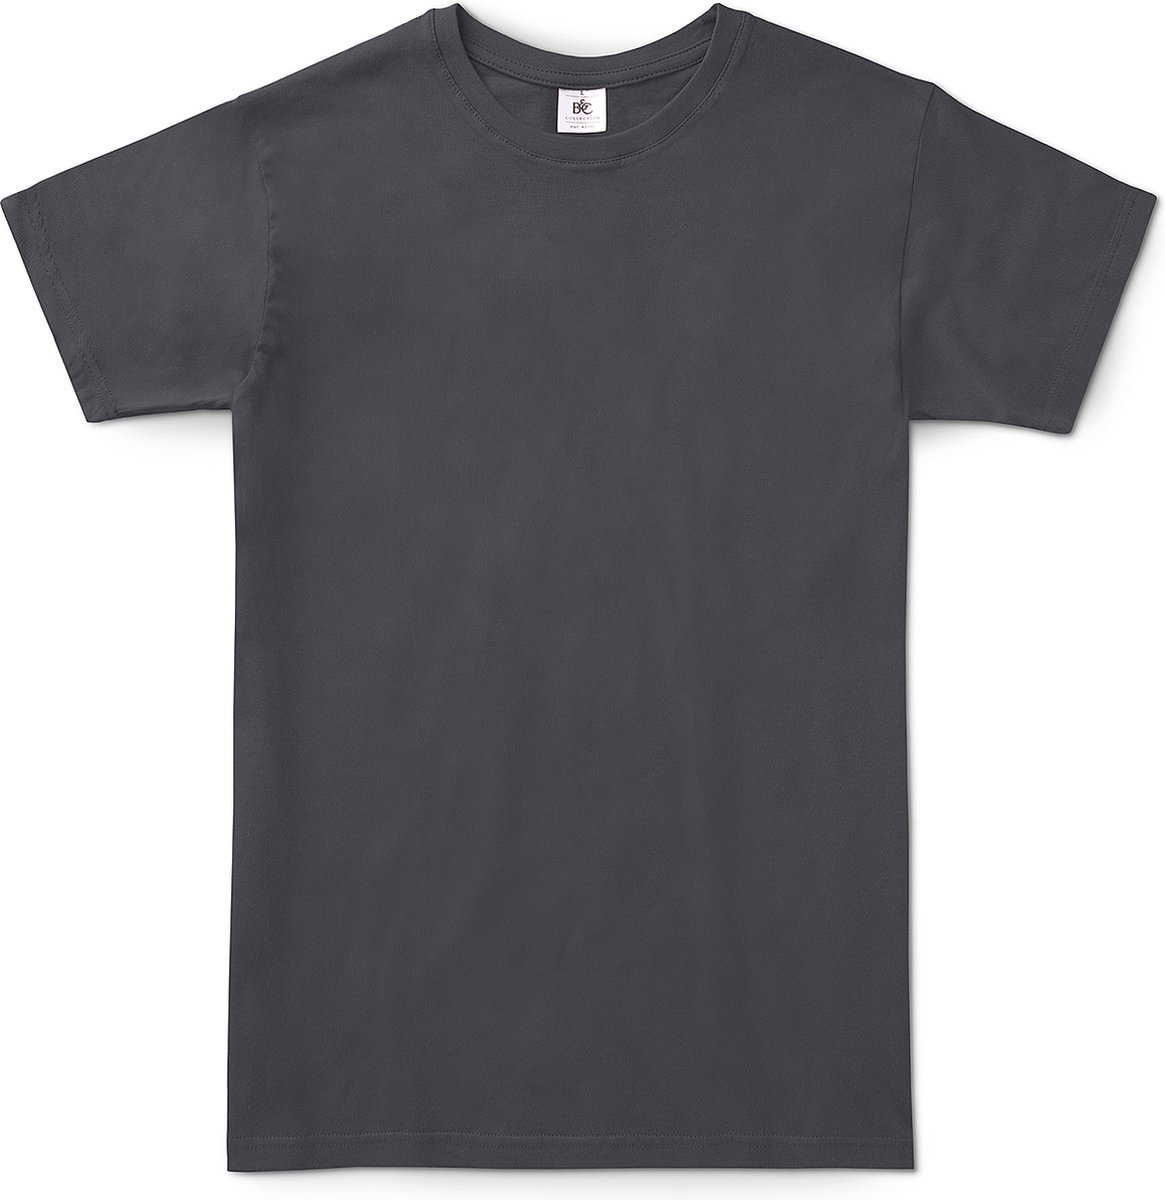 B&C Exact 150 Heren Korte Mouwen T-Shirt - Donker Grijs - Extra Small